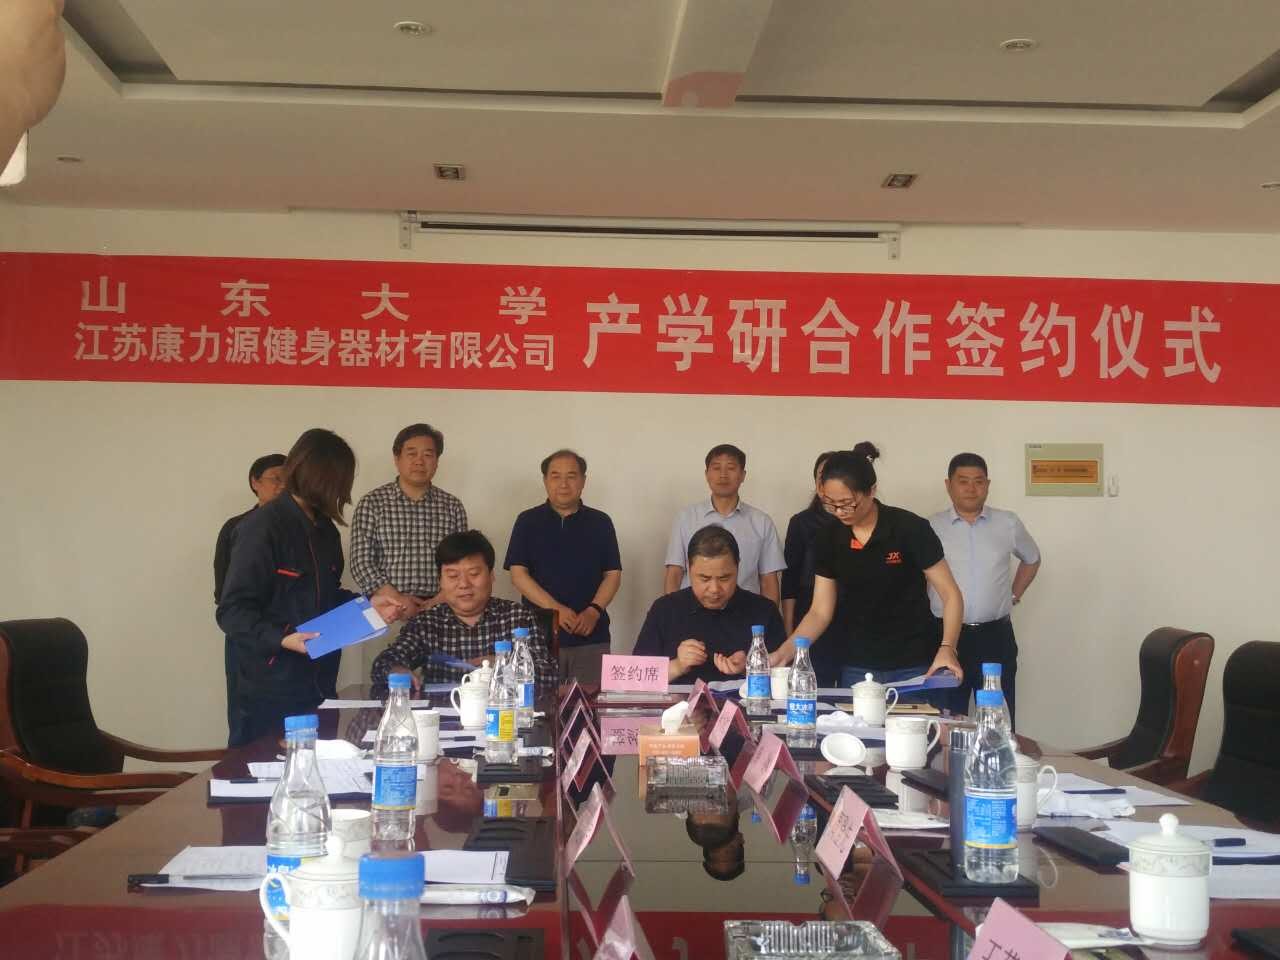 Academic and industrial win-win/ Jiangsu Junxia and Shandong University reached a strategic cooperation